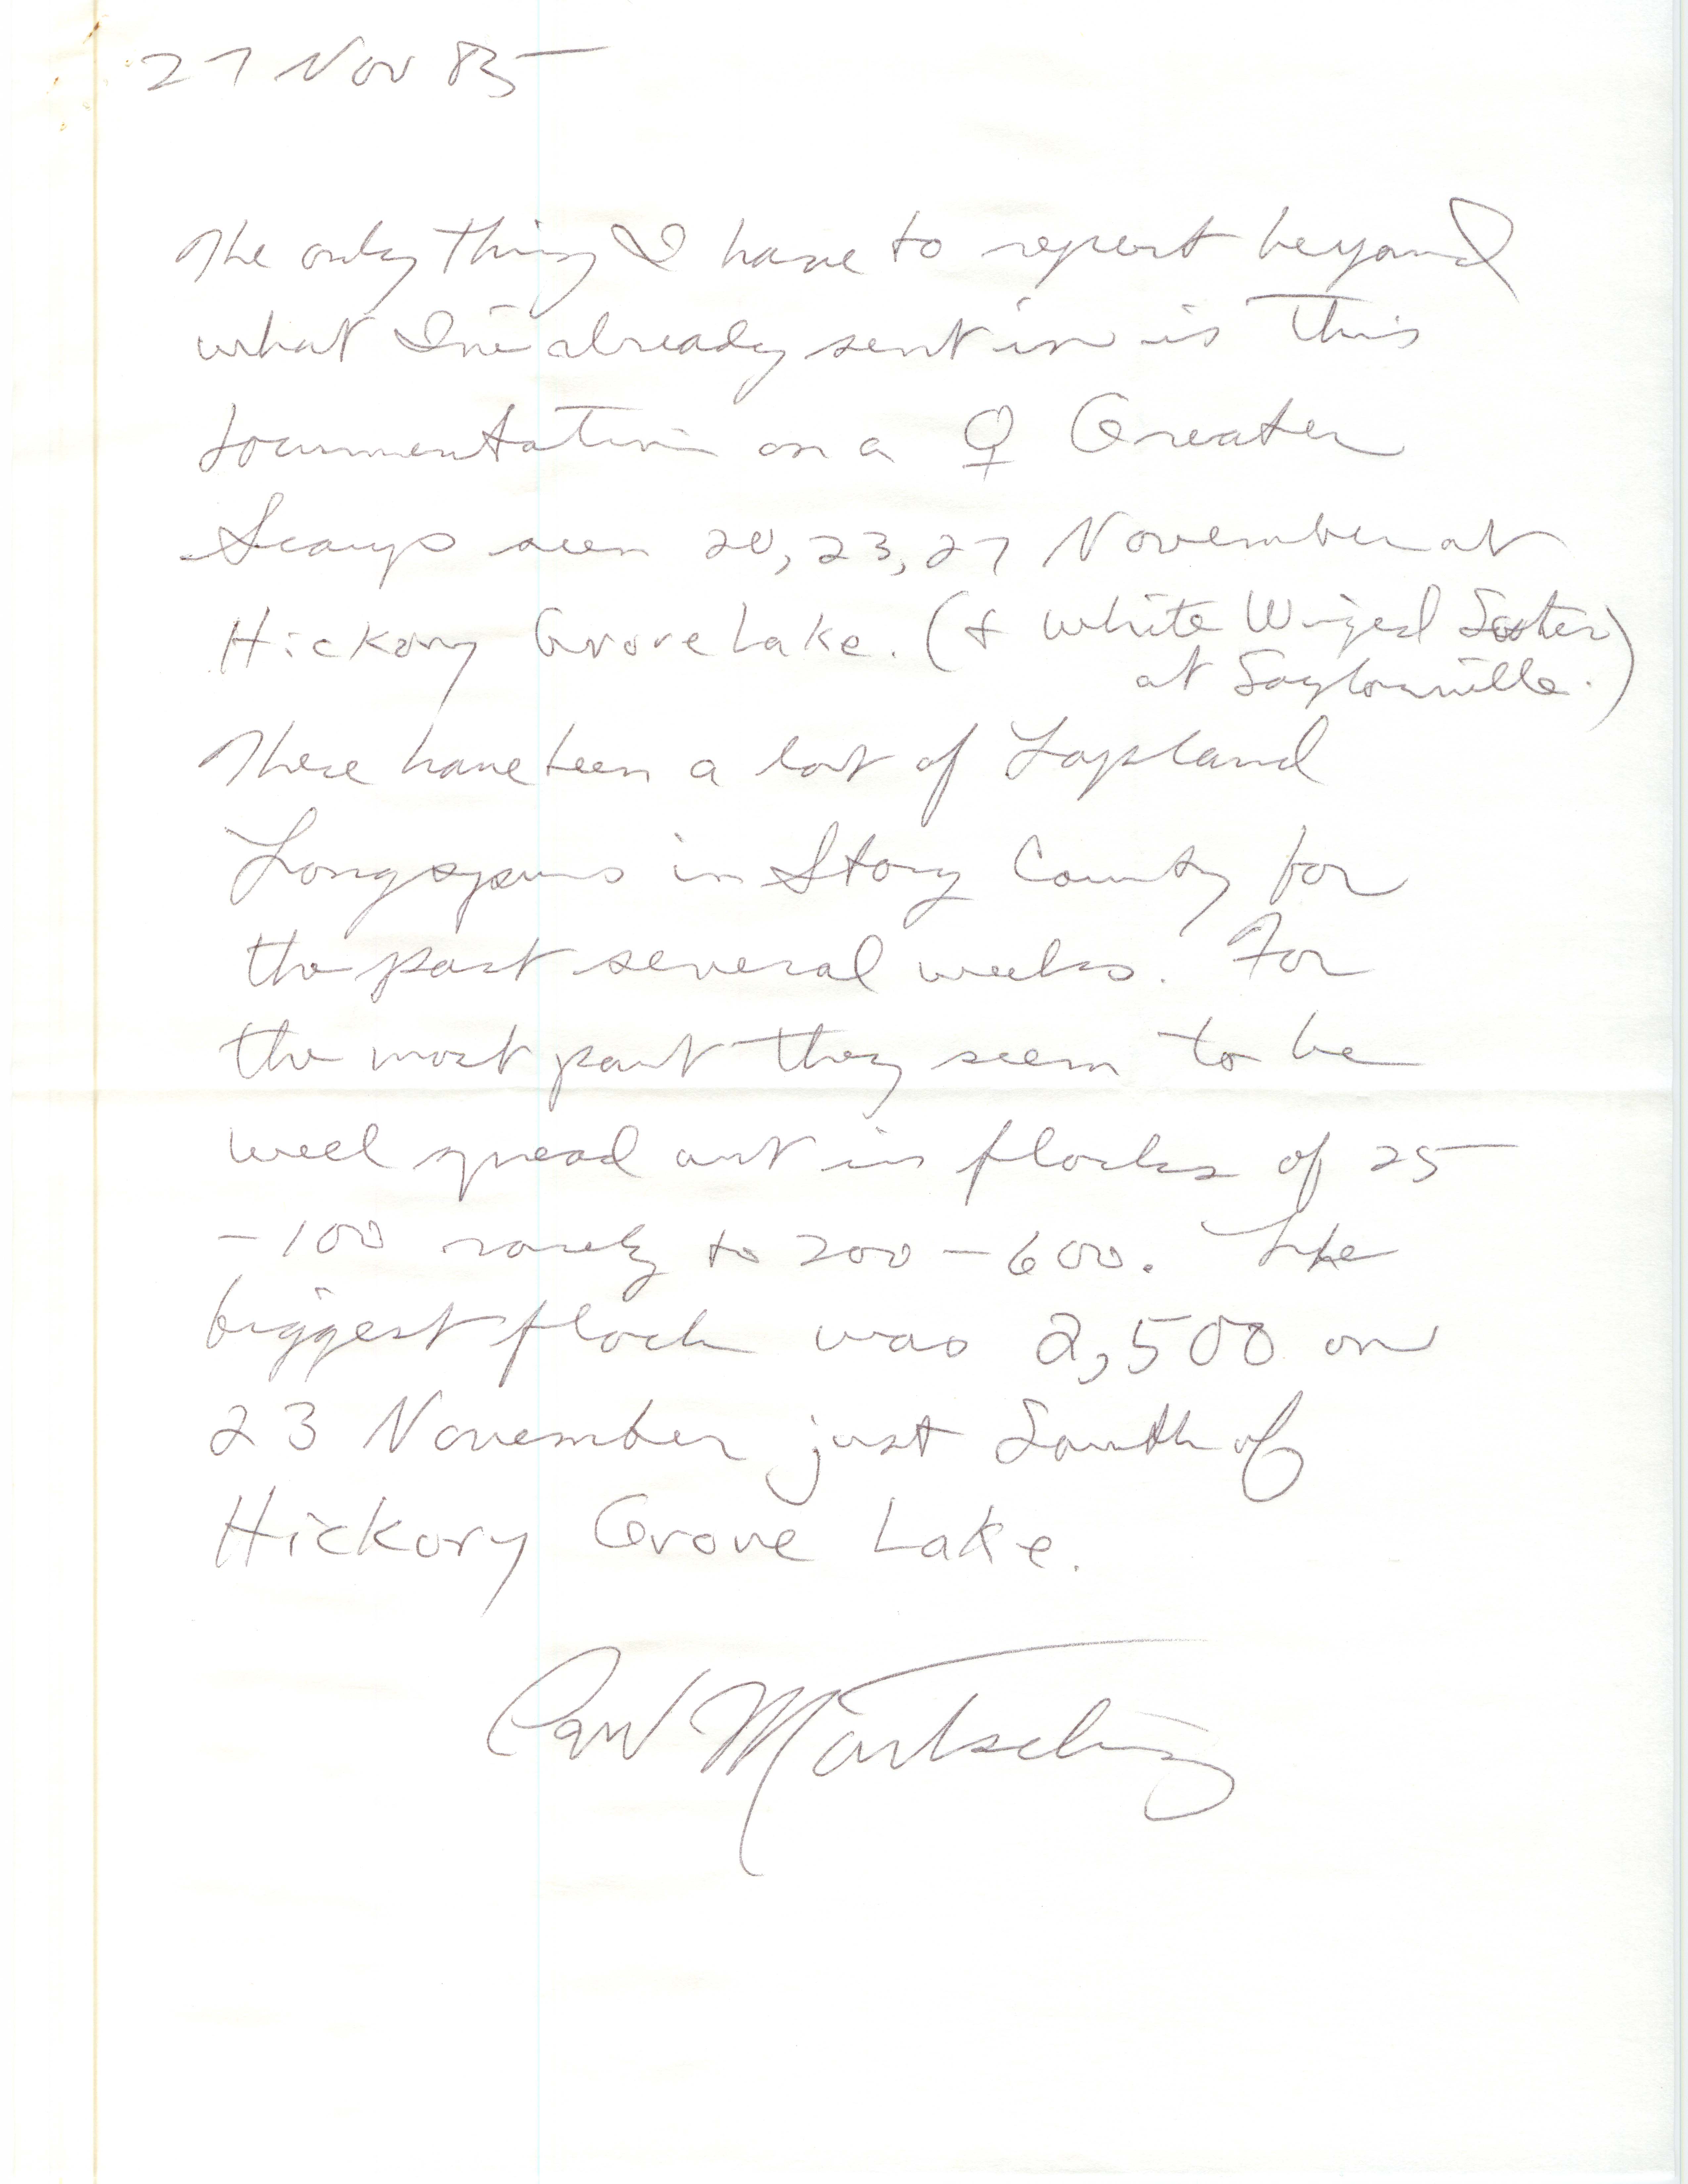 Paul Martsching letter to Thomas Kent regarding Greater Scaup documentation, November 27, 1985